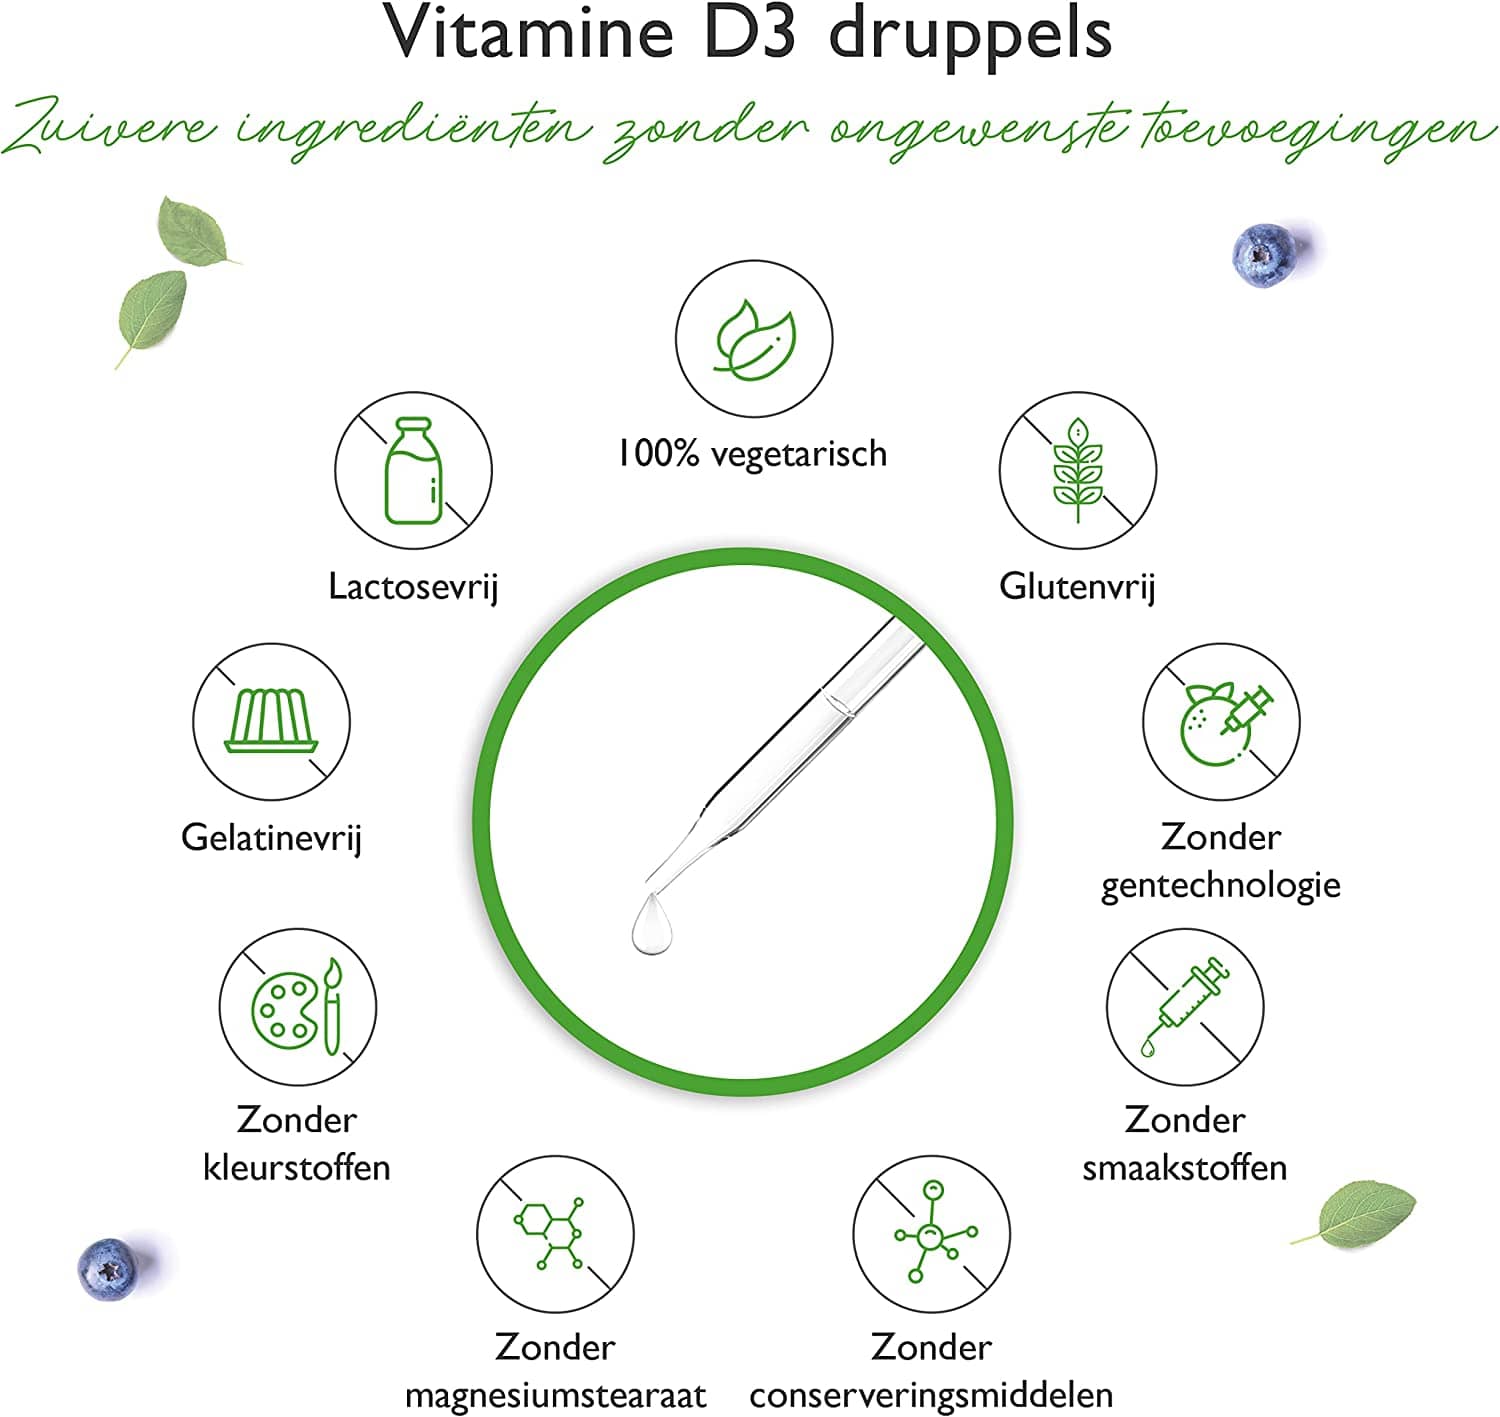 Vitamine D3 | 2000 I.E. | 2380 Druppels | Zonder Alcohol | Vit4ever